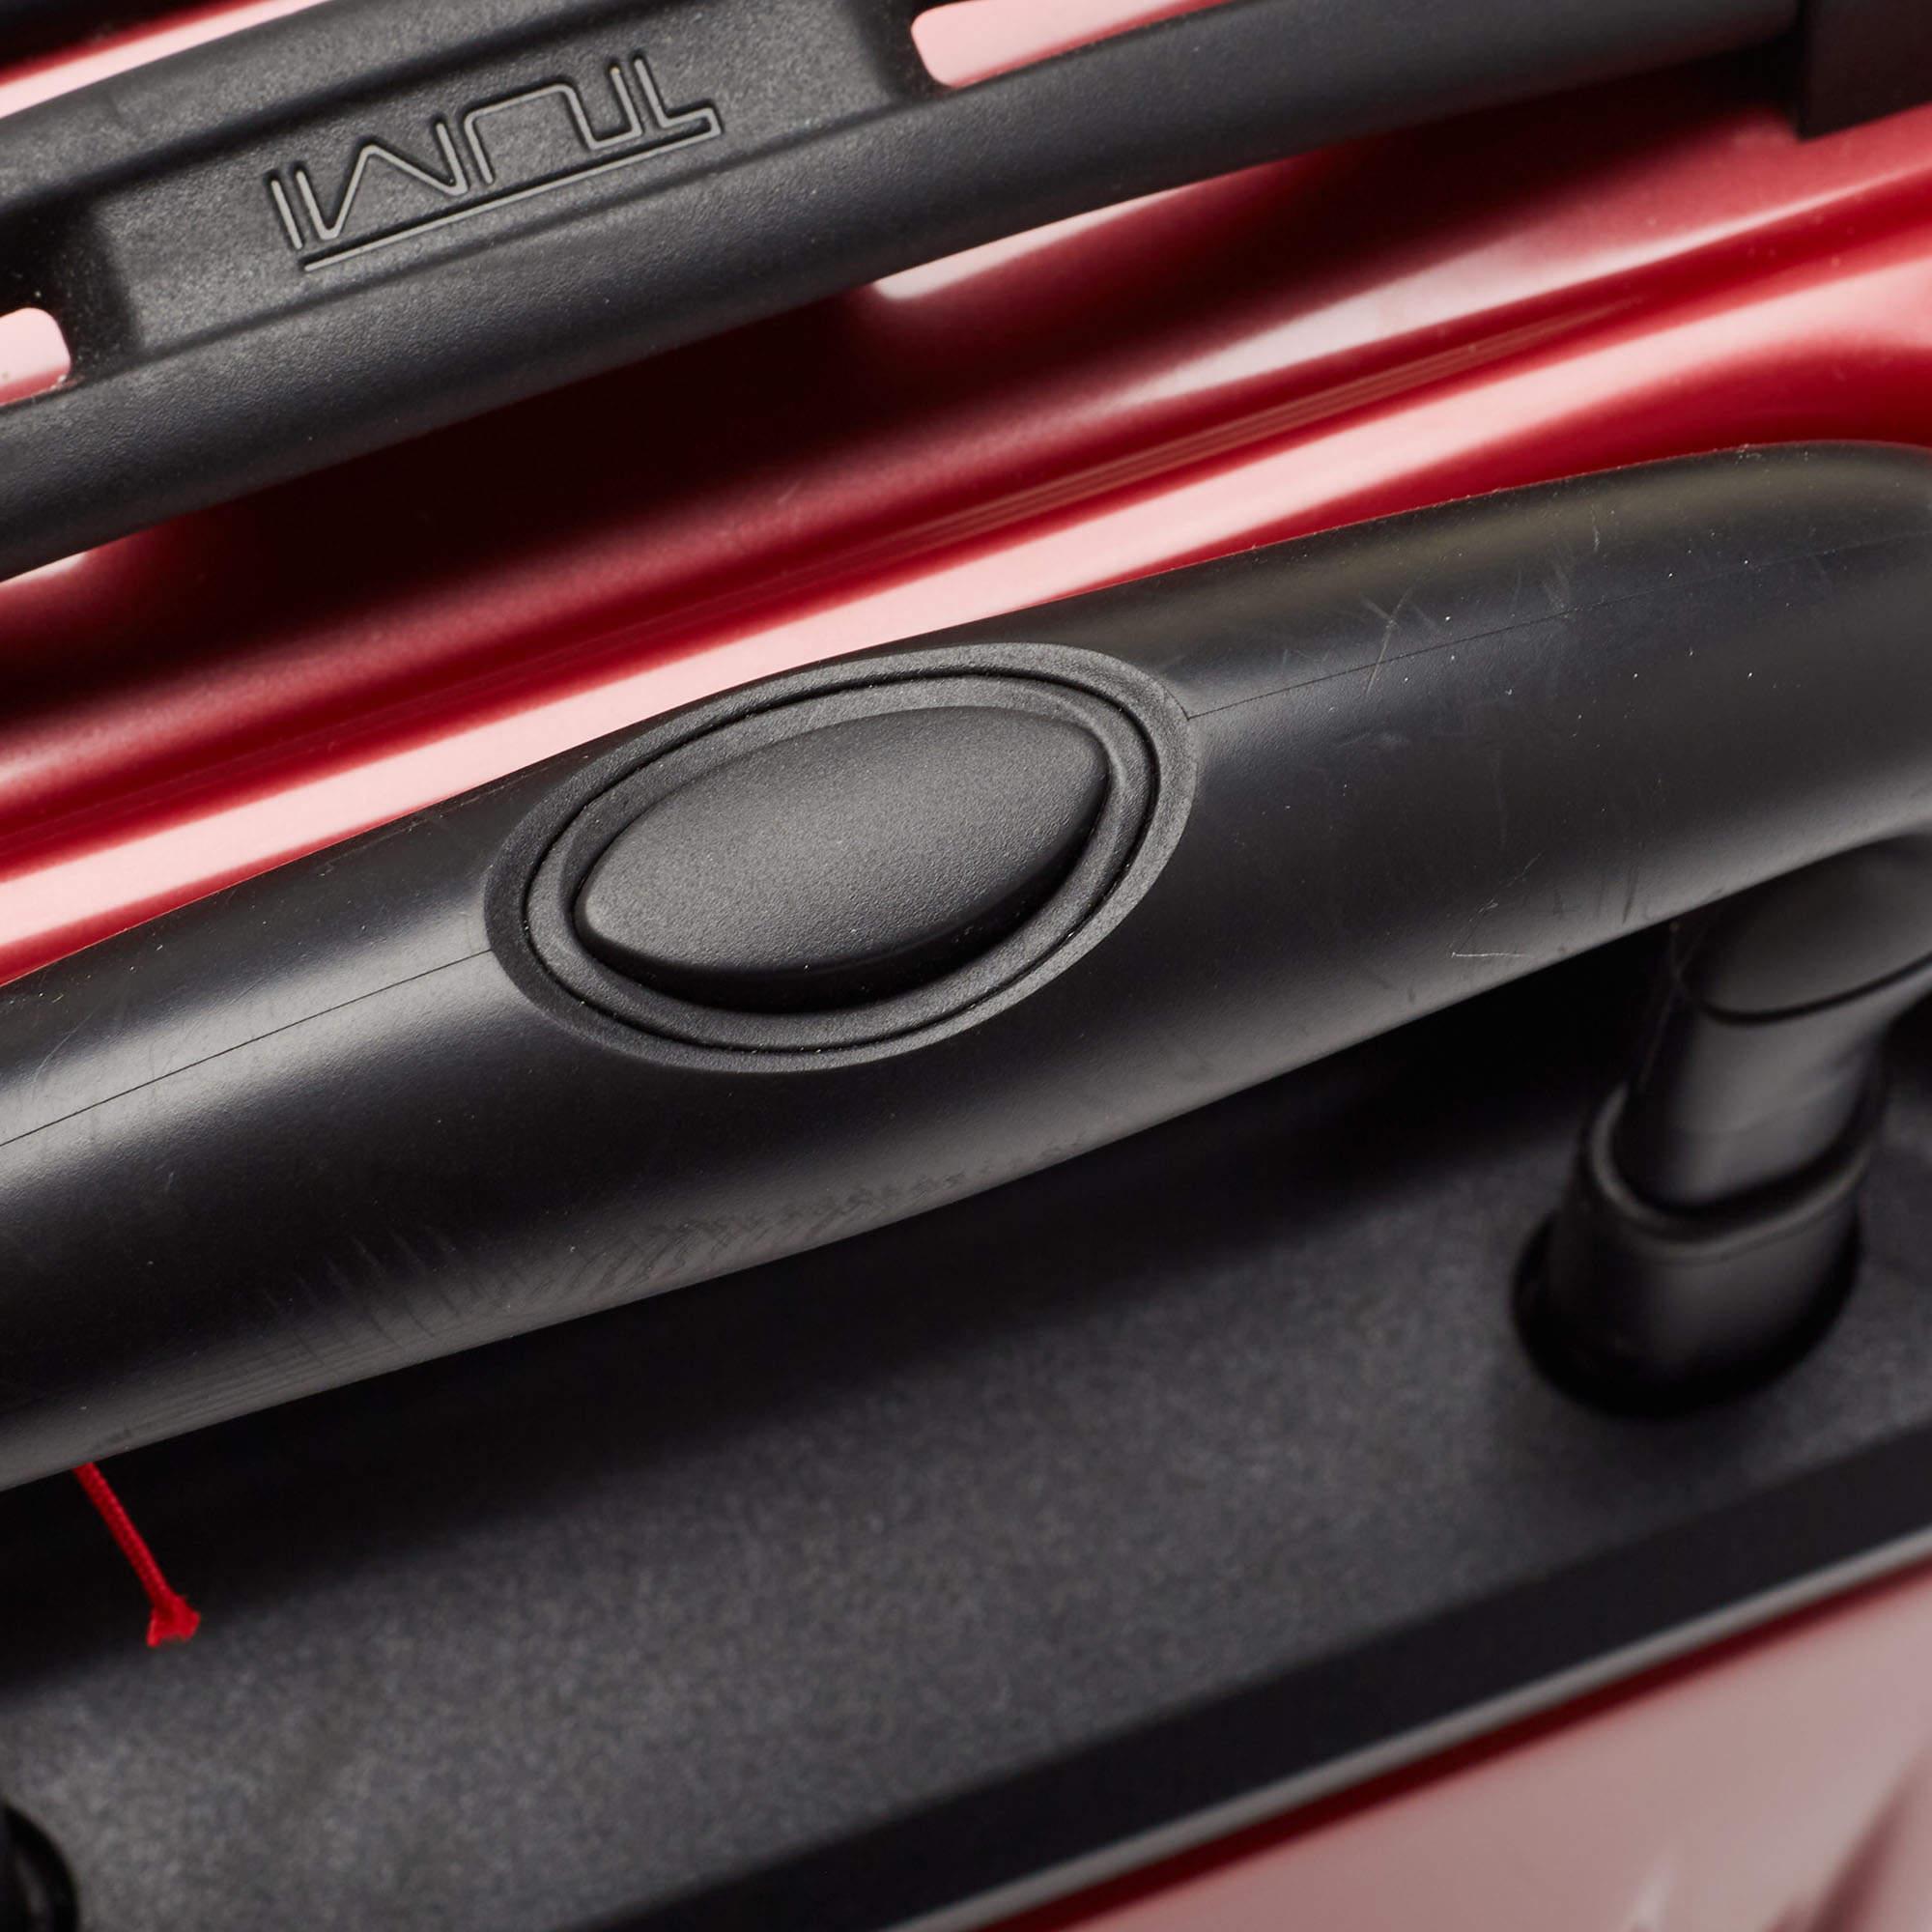 TUMI Rote 4 Rädern V4 International Expandable Carry On Luggage, ausziehbar im Angebot 5